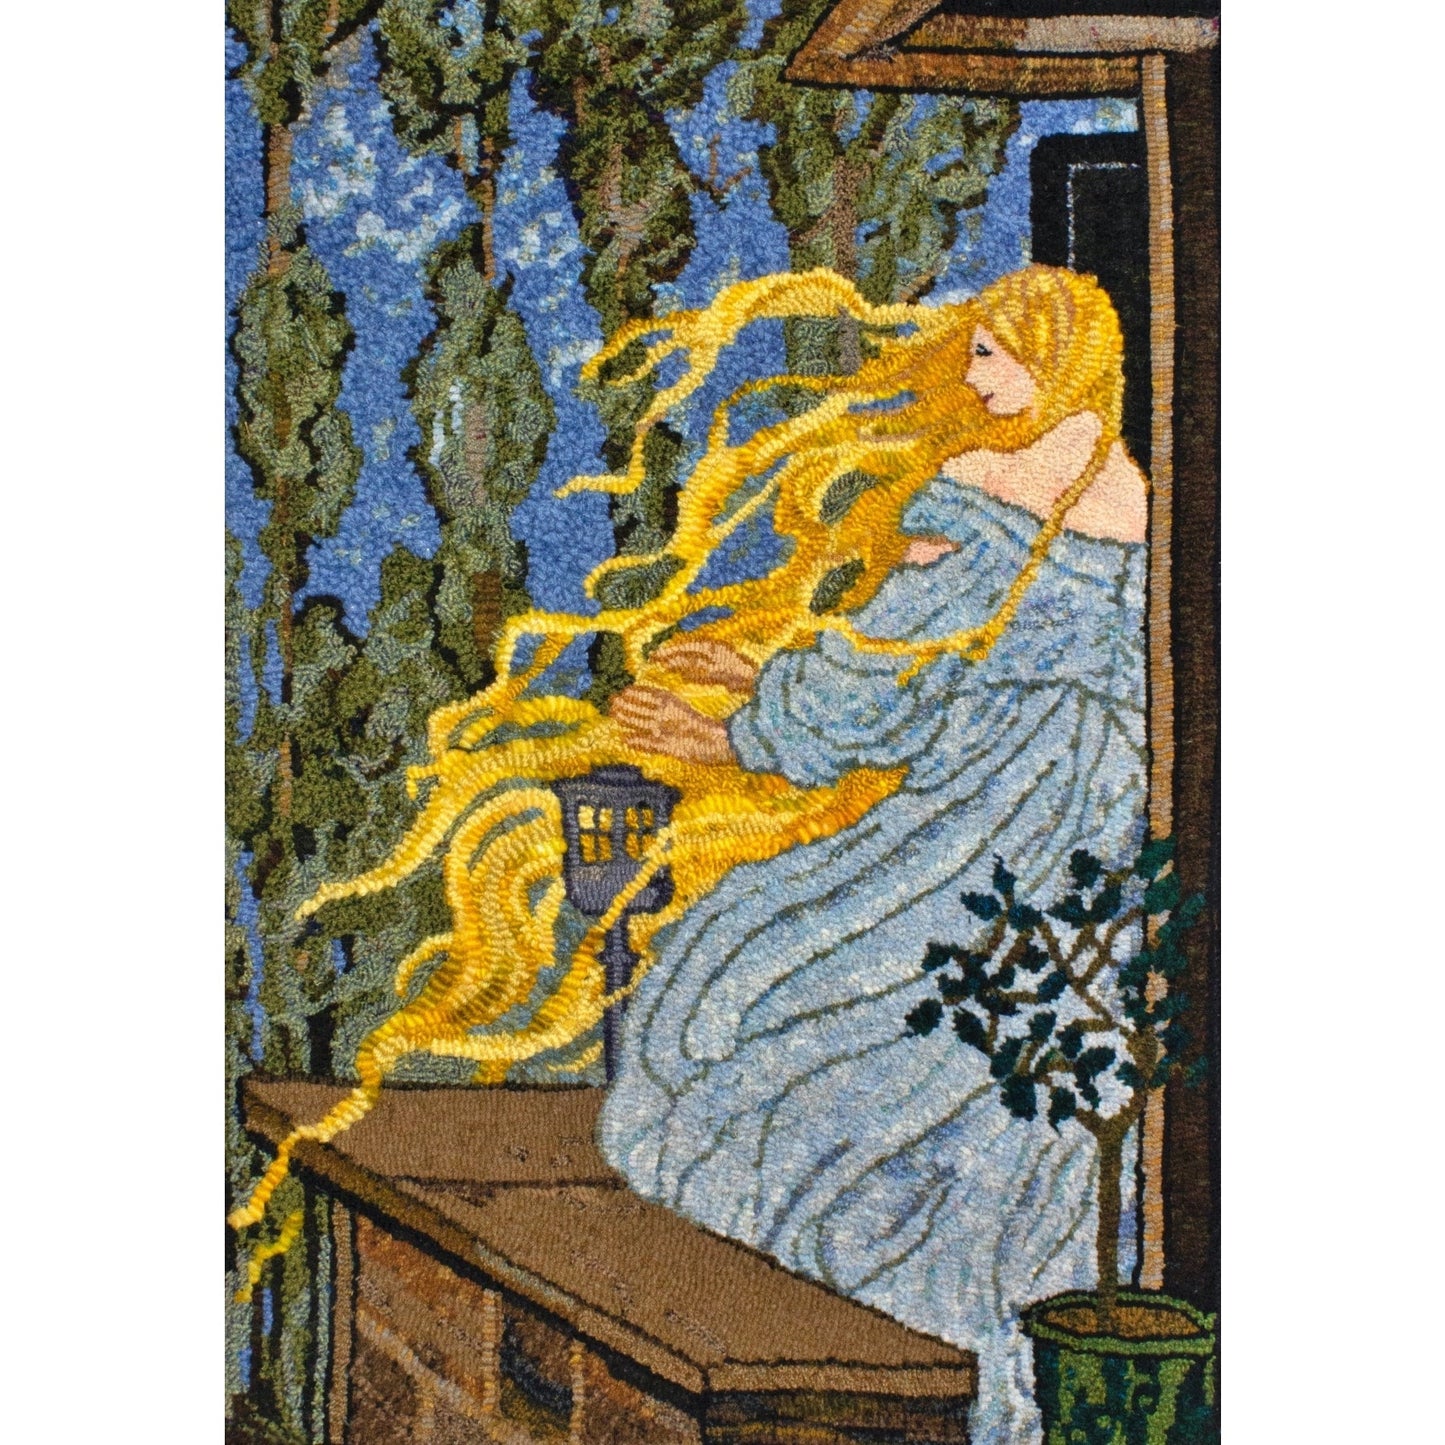 PR1920-A: Small Rapunzel, Ill. Emma Florence Henderson, 1891